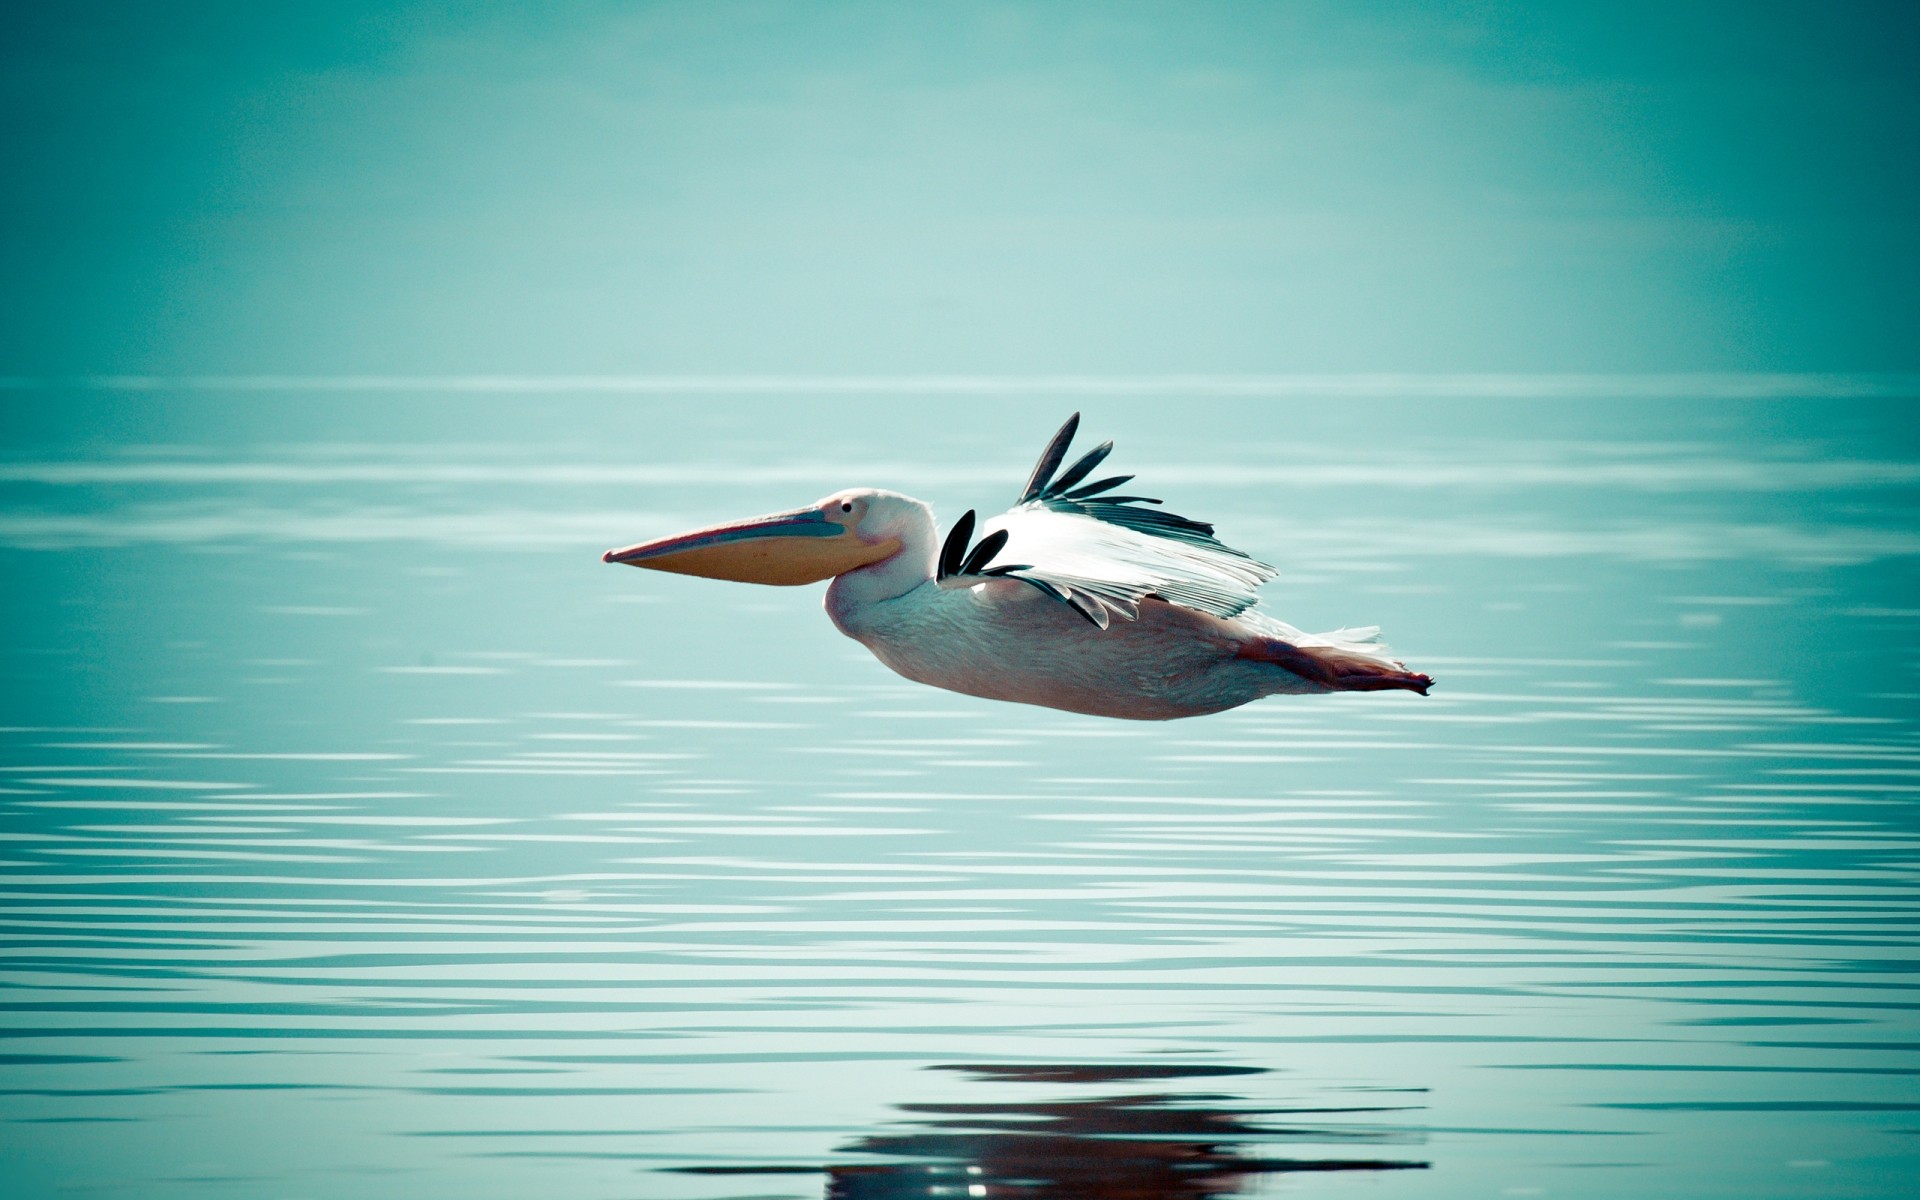 waterfowl water wildlife bird nature outdoors swimming ocean sea wild lake summer pelican